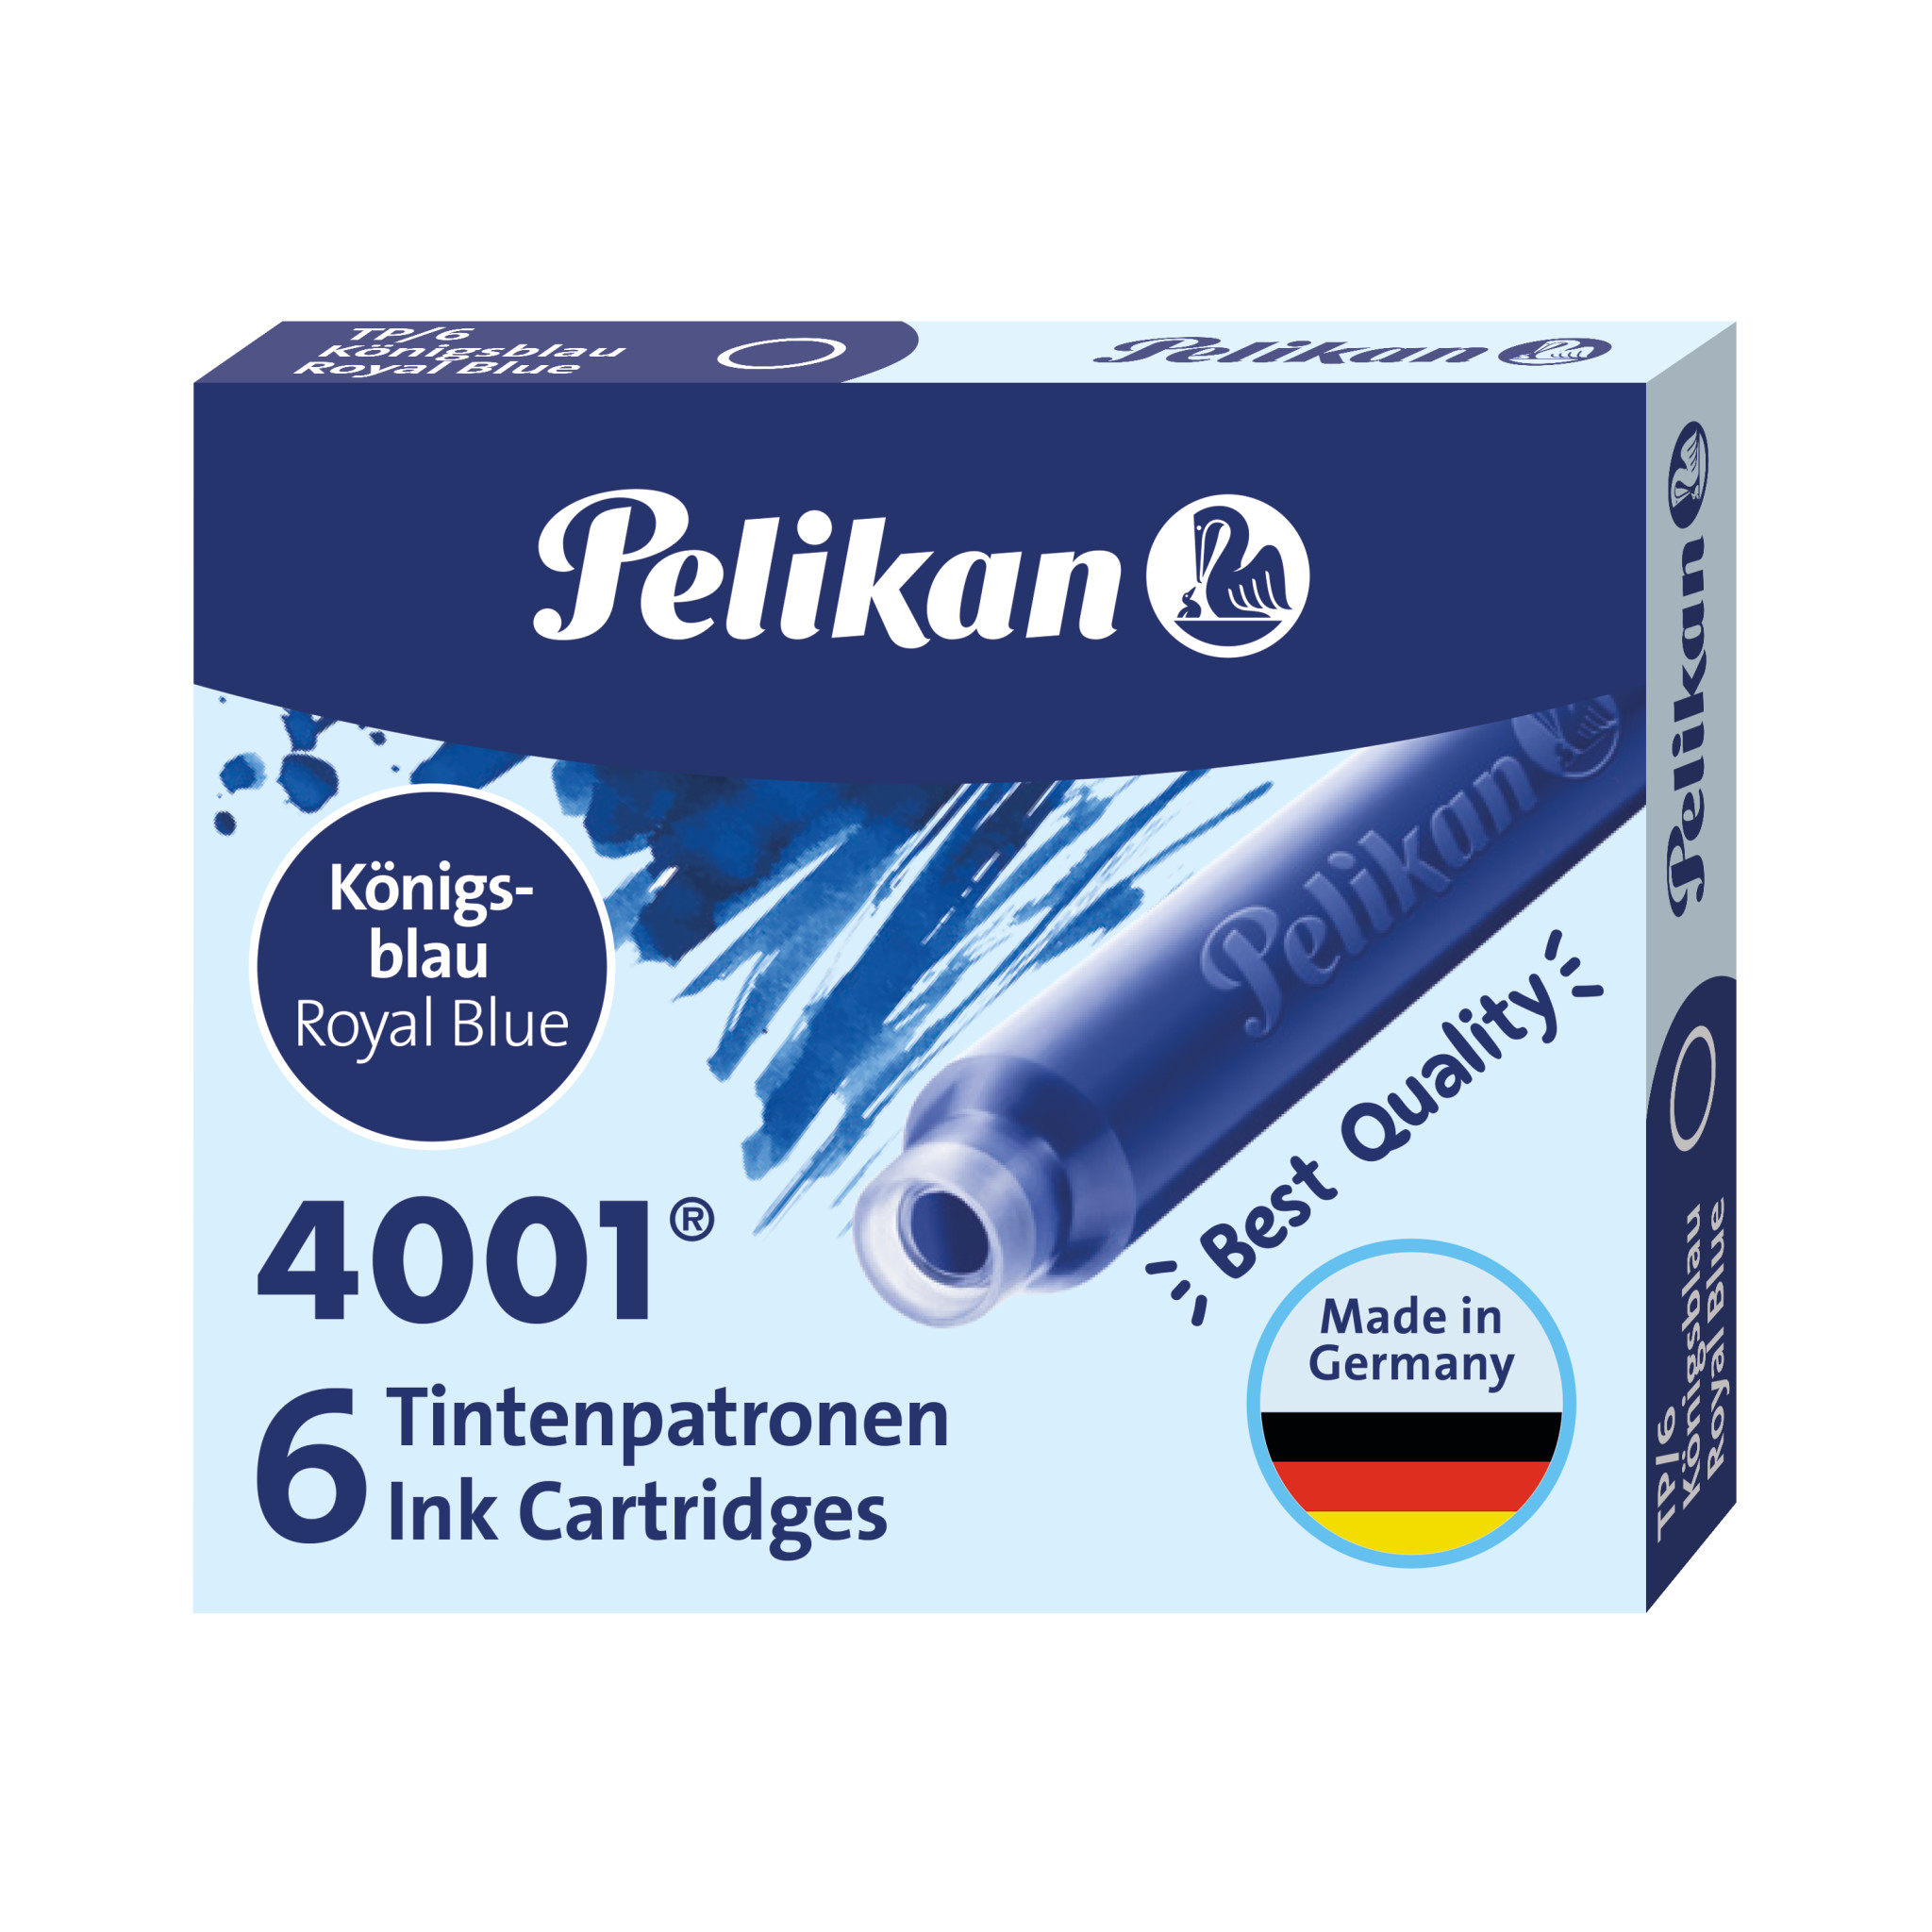 Pelikan - Tintenpatronen 4001 - 6 Stück - Königsblau